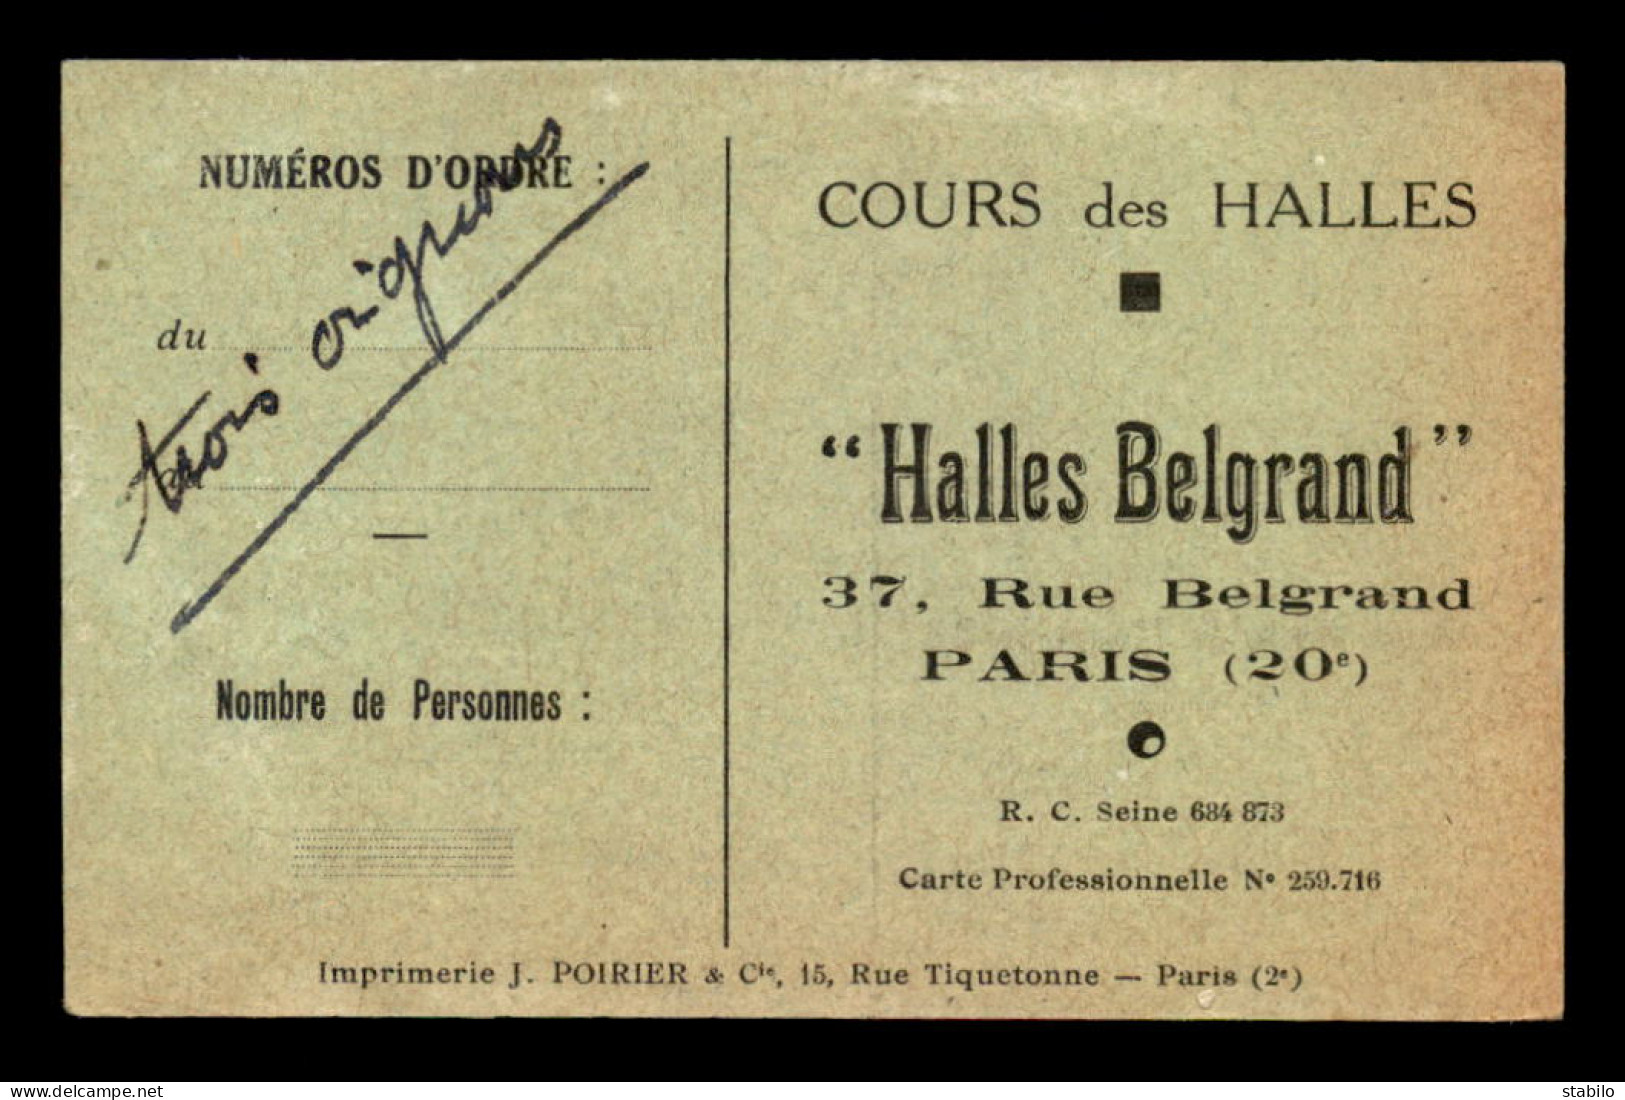 75 - PARIS 20EME - CARTE DE SERVICE - HALLES BELGRAND, 37 RUE BELGRAND - Arrondissement: 20